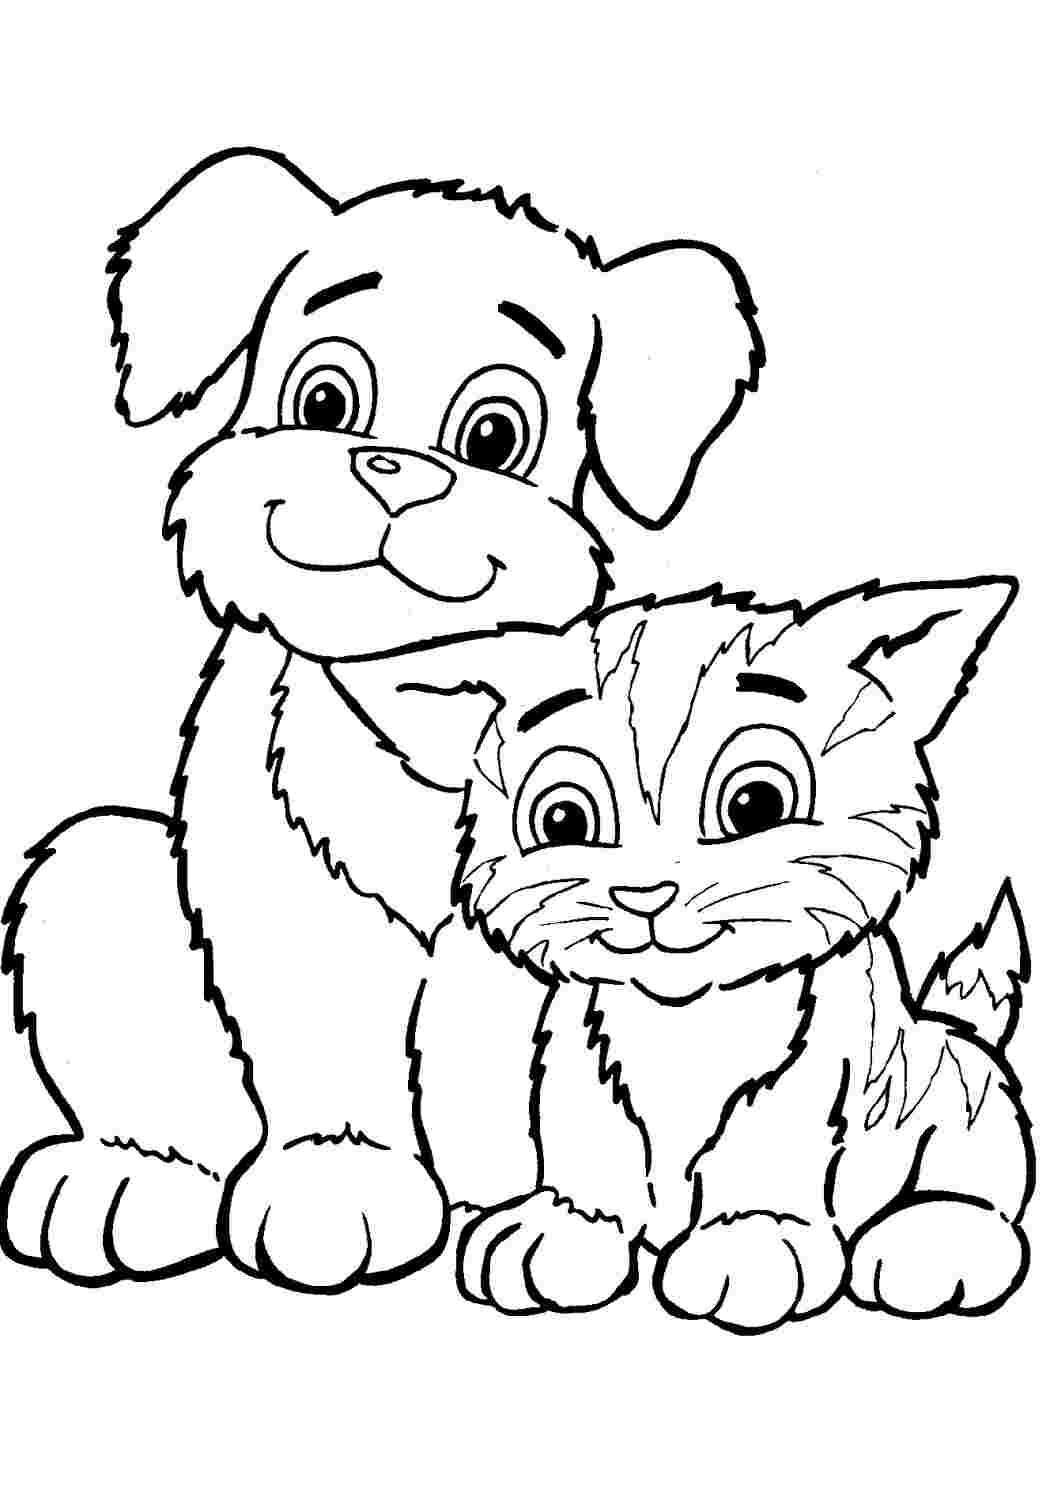 Дружба - кошка и собака - Животные - Раскраски антистресс